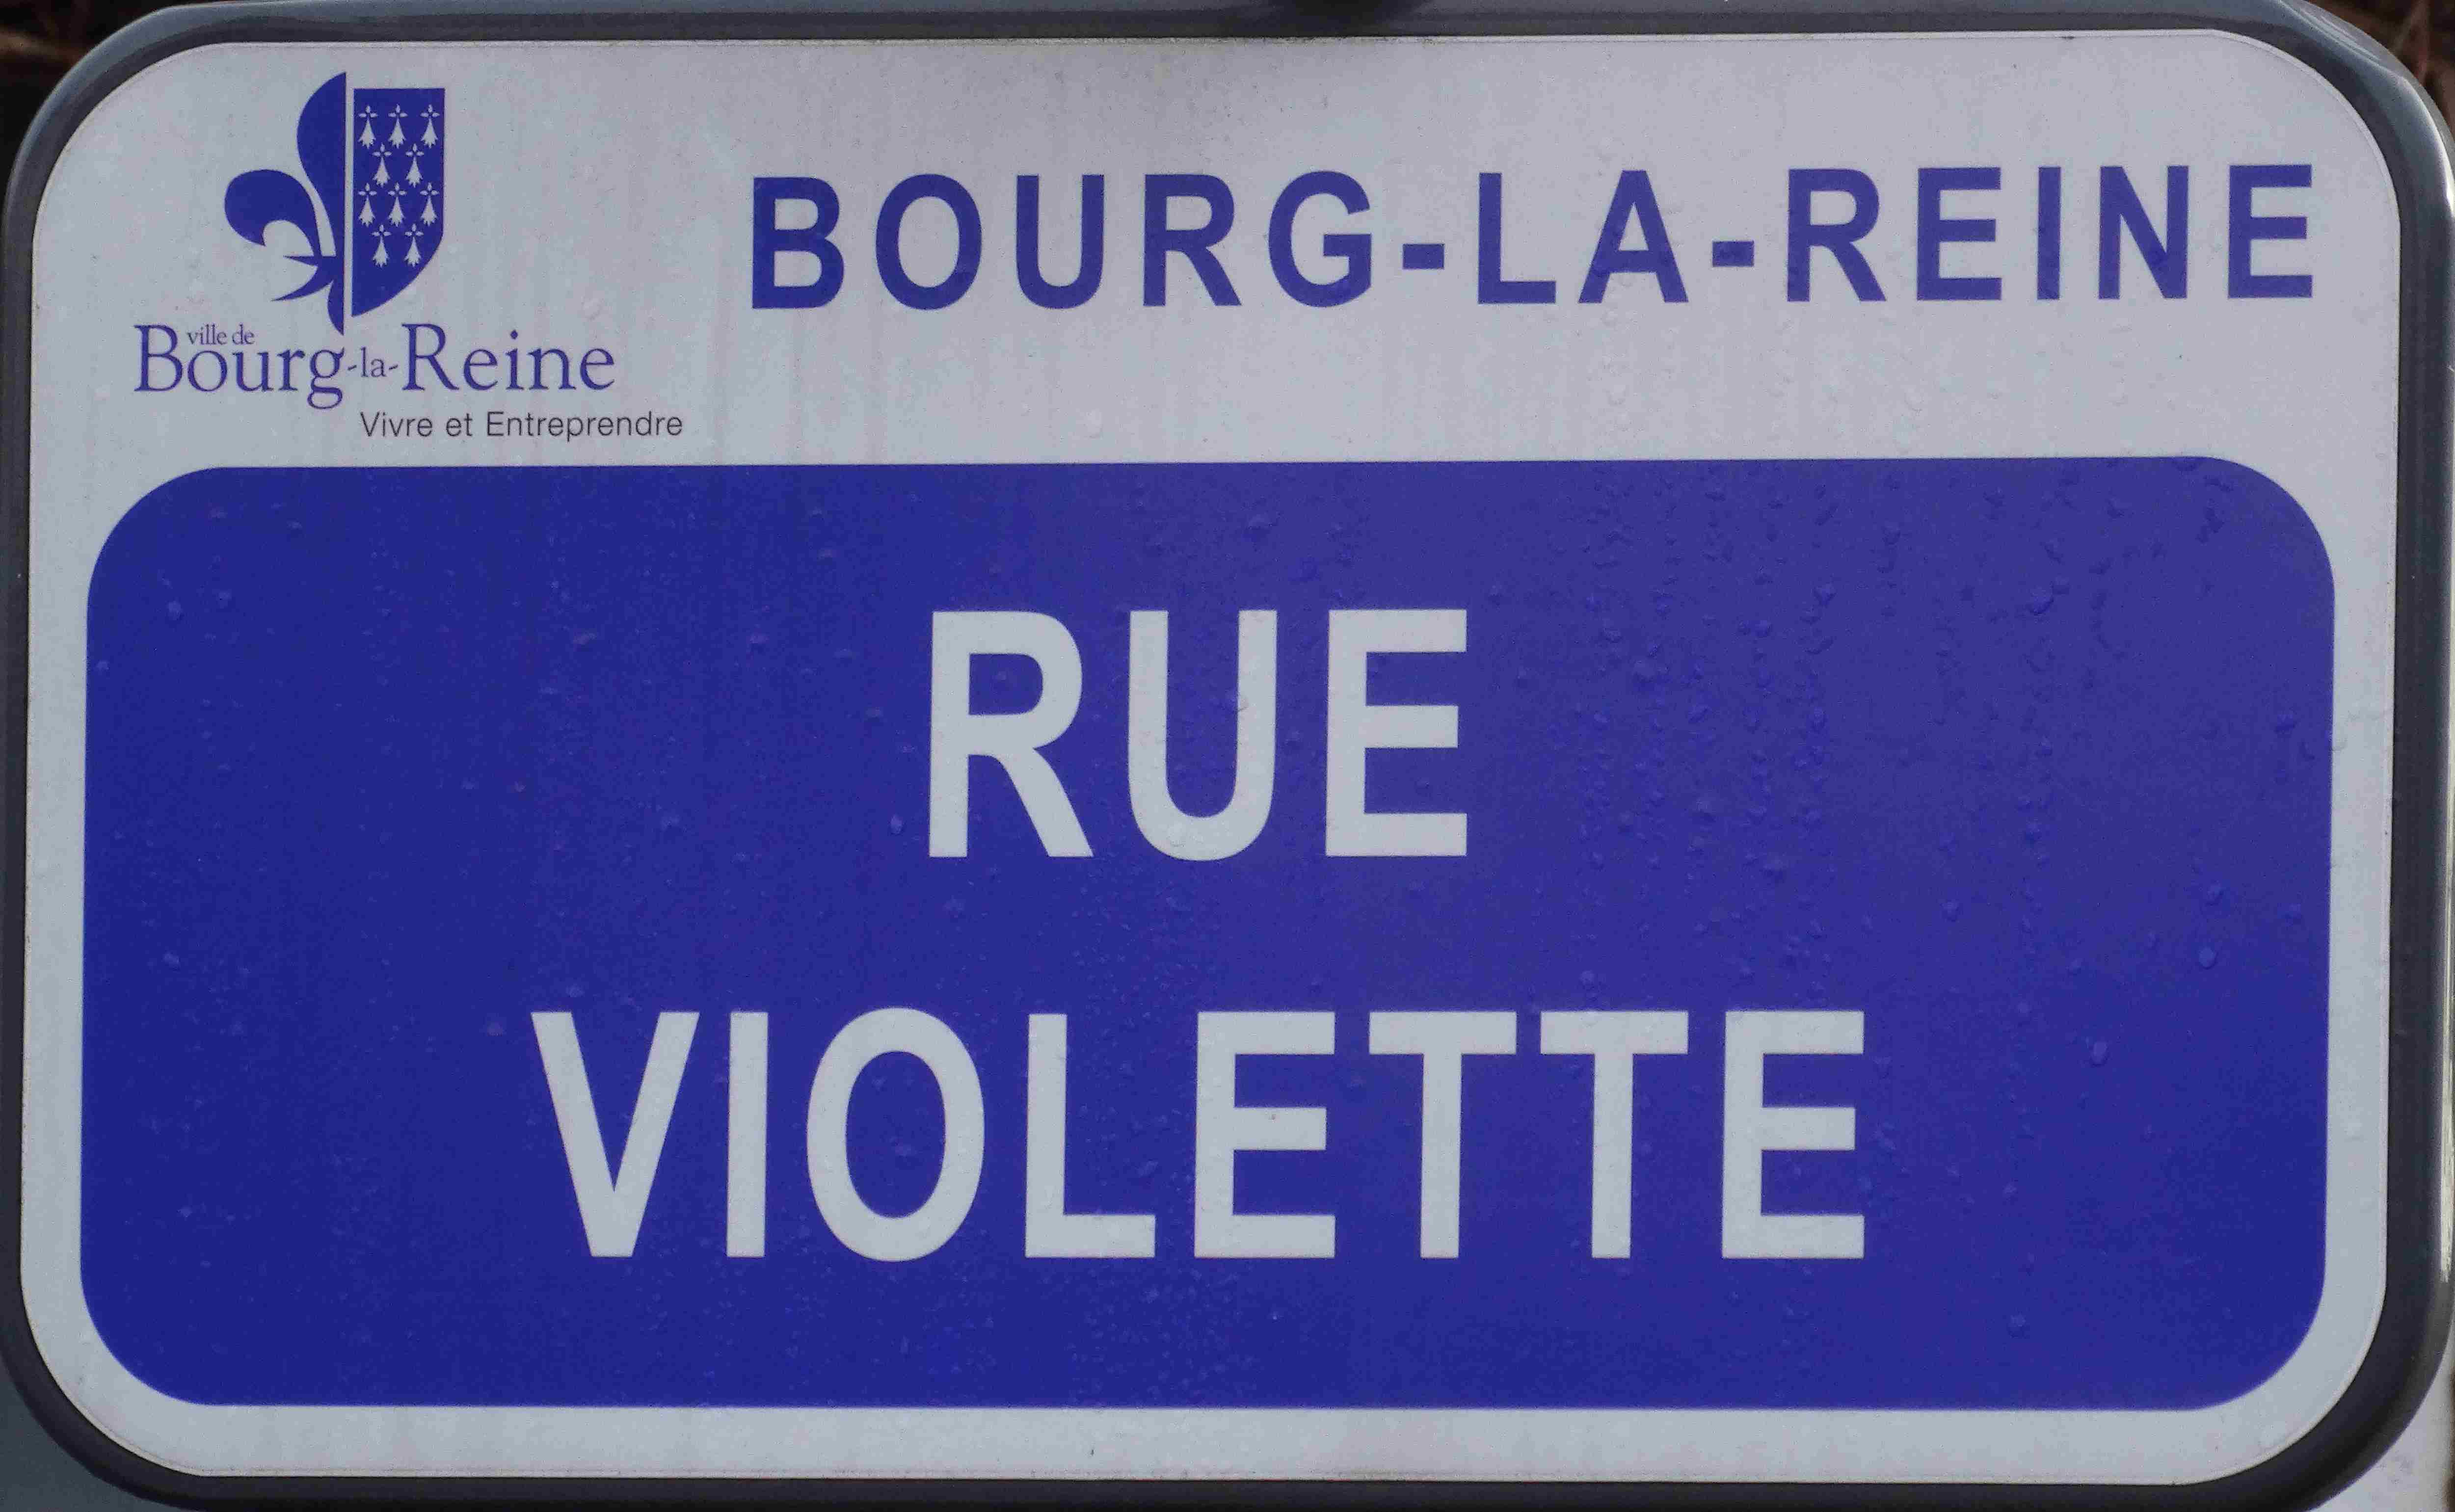 Rue Violette bourg-la-reine